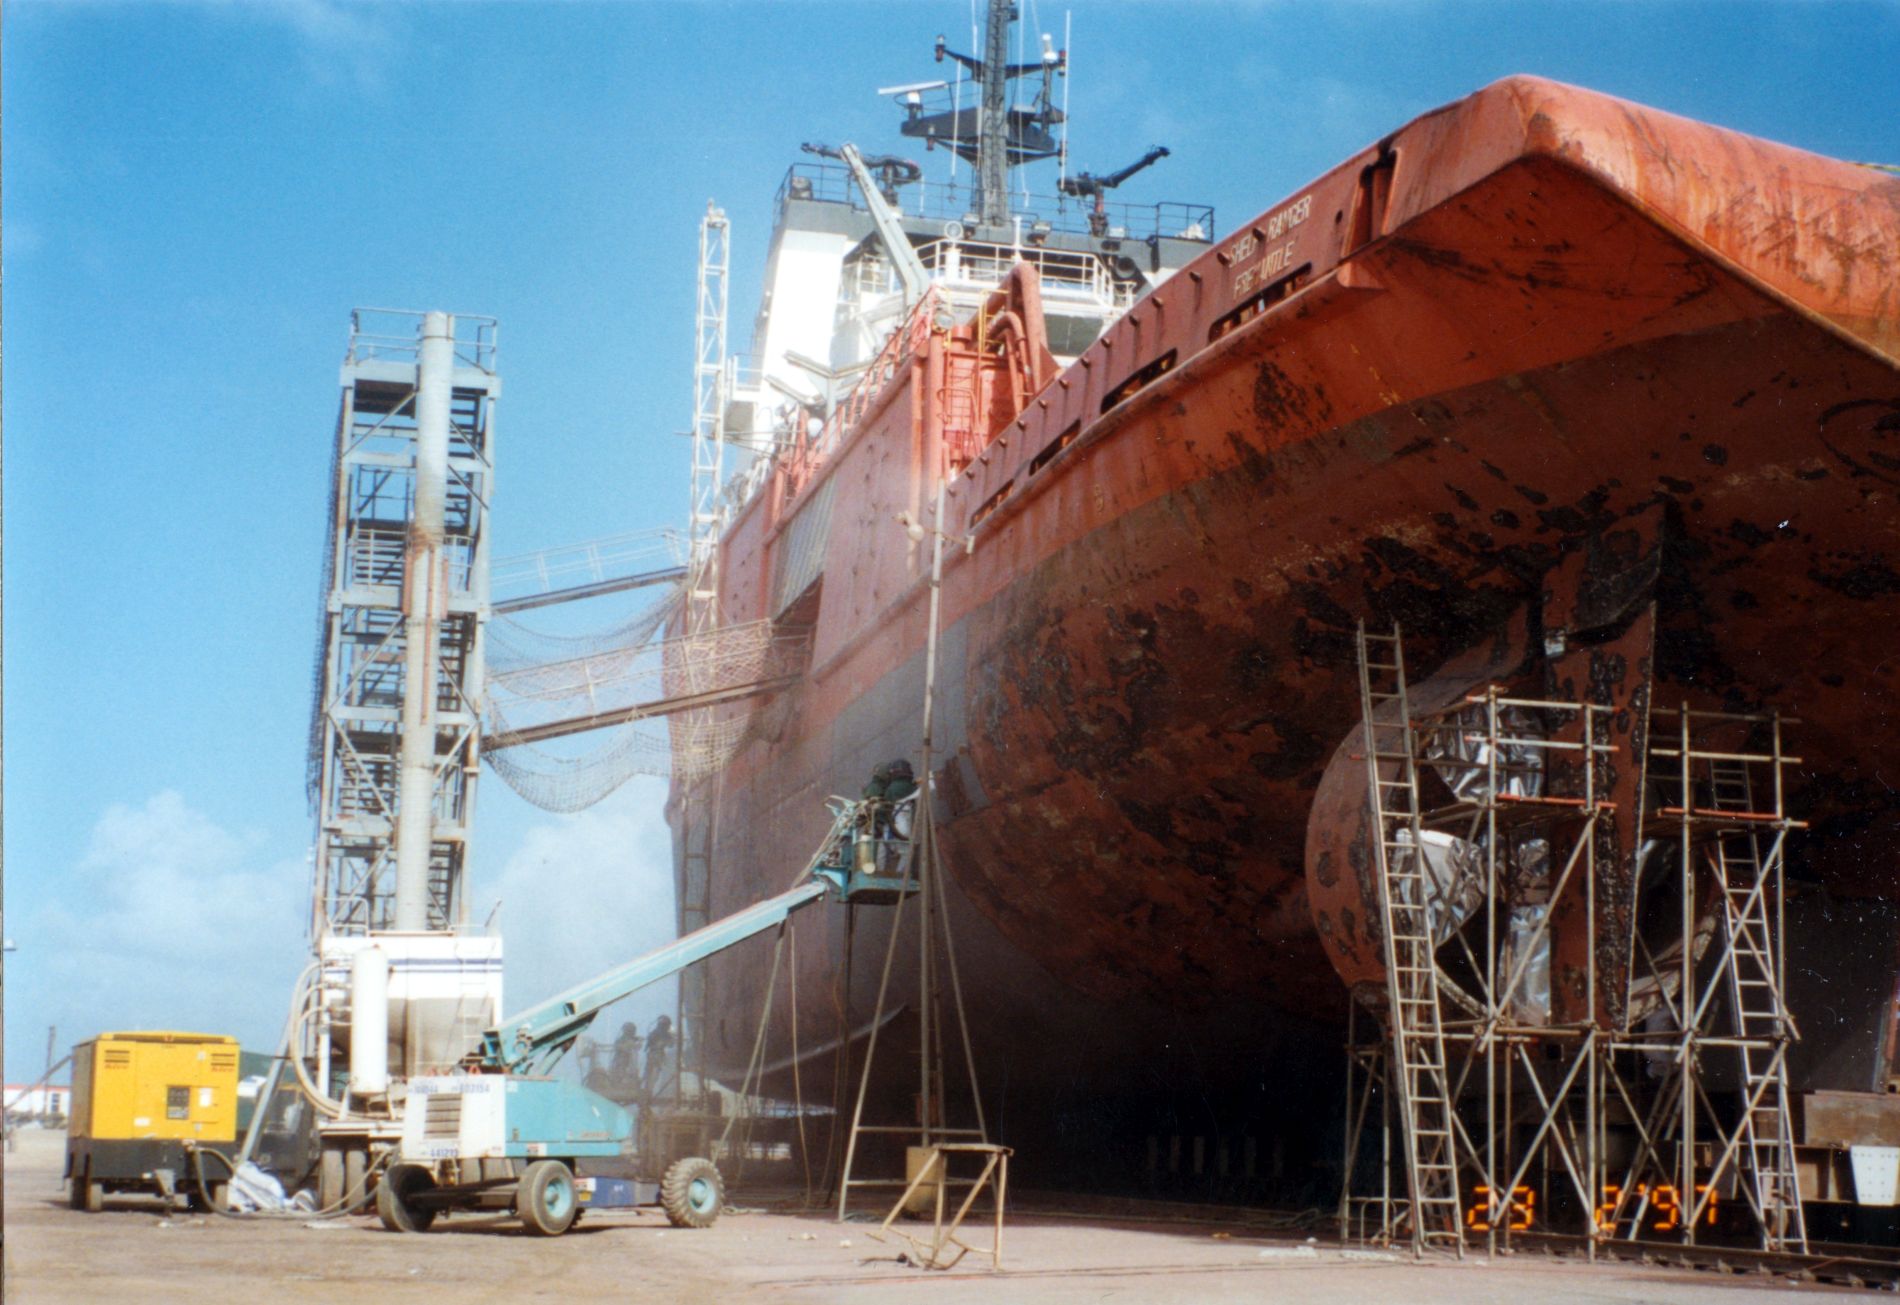 Shipyards and Marine